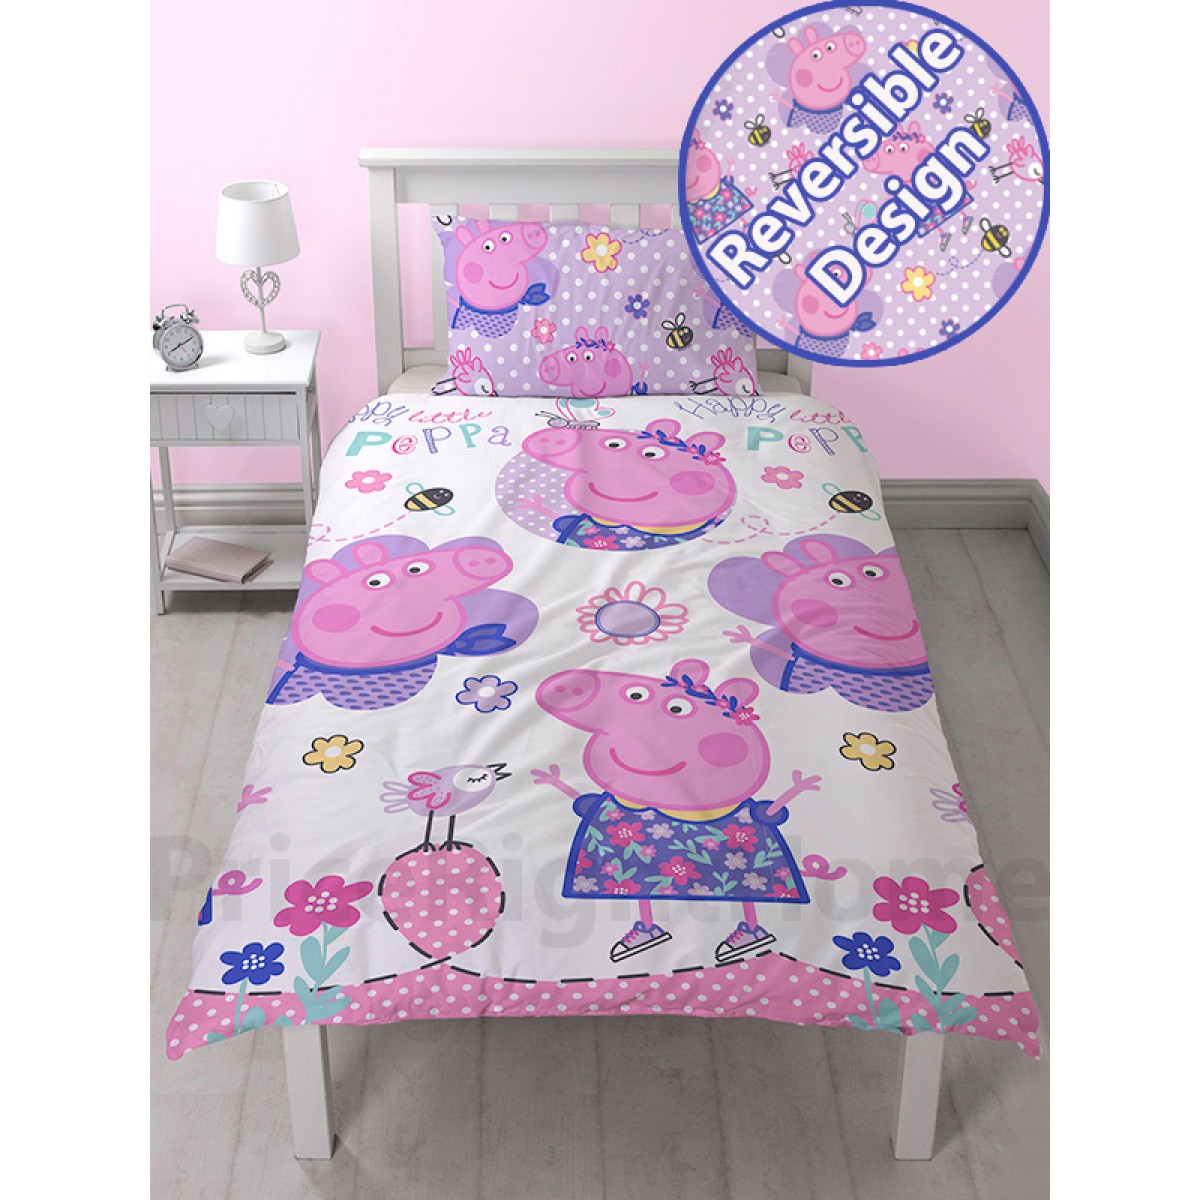 Peppa Pig Toddler Bed Themes - Peppa Toddler Bed Sets - HD Wallpaper 